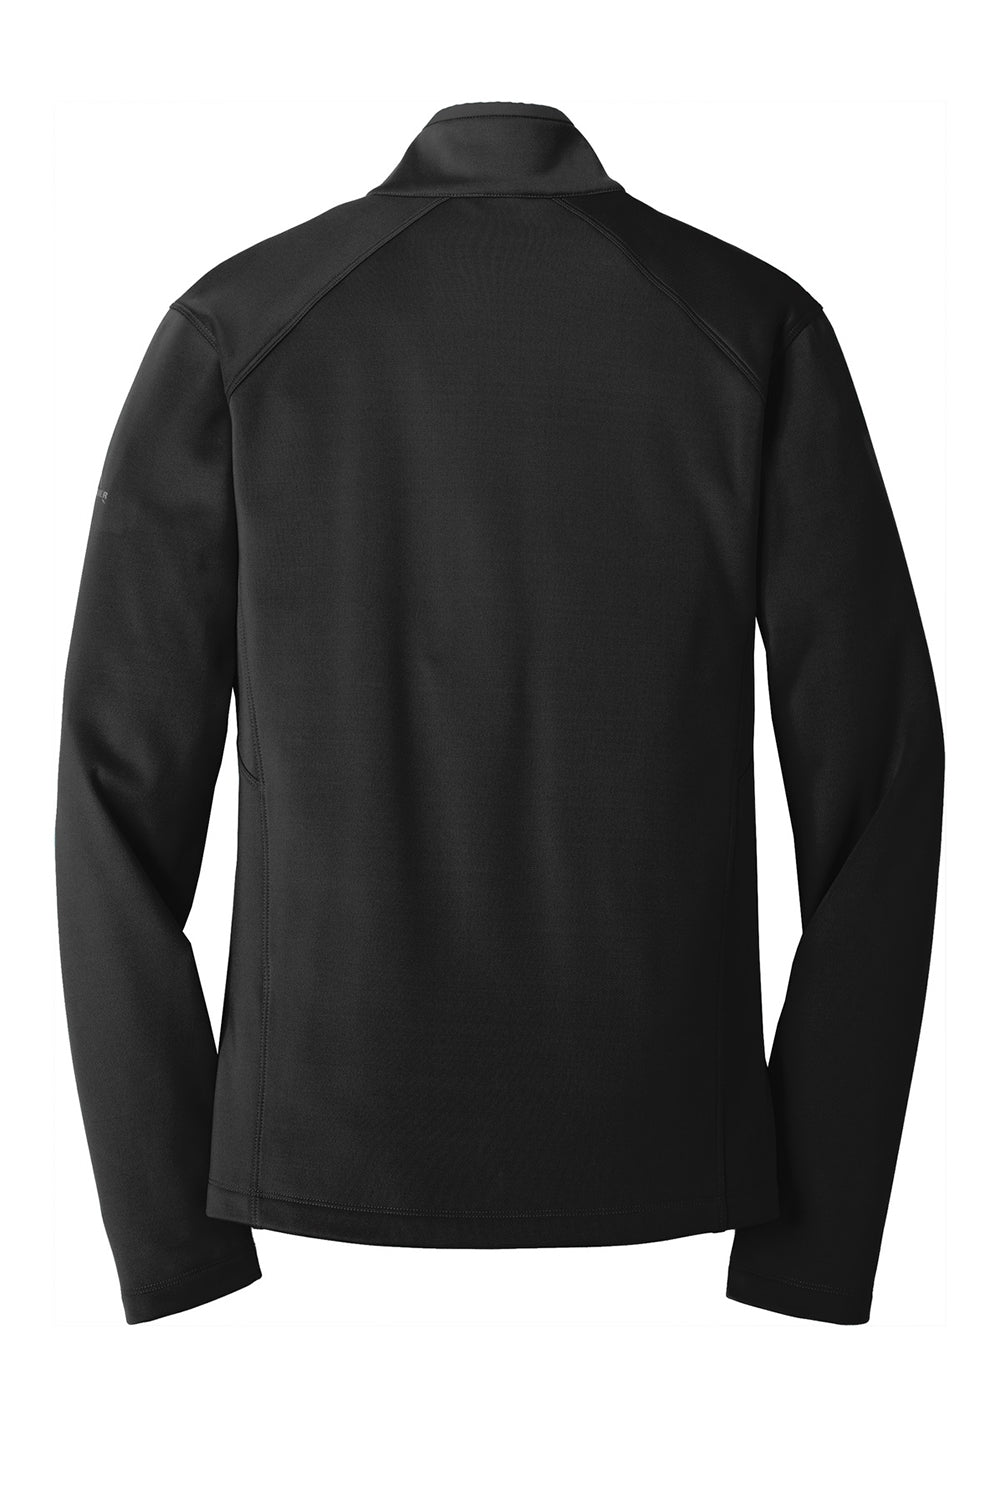 Eddie Bauer EB240 Mens Highpoint Pill Resistant Fleece Full Zip Jacket Black Flat Back